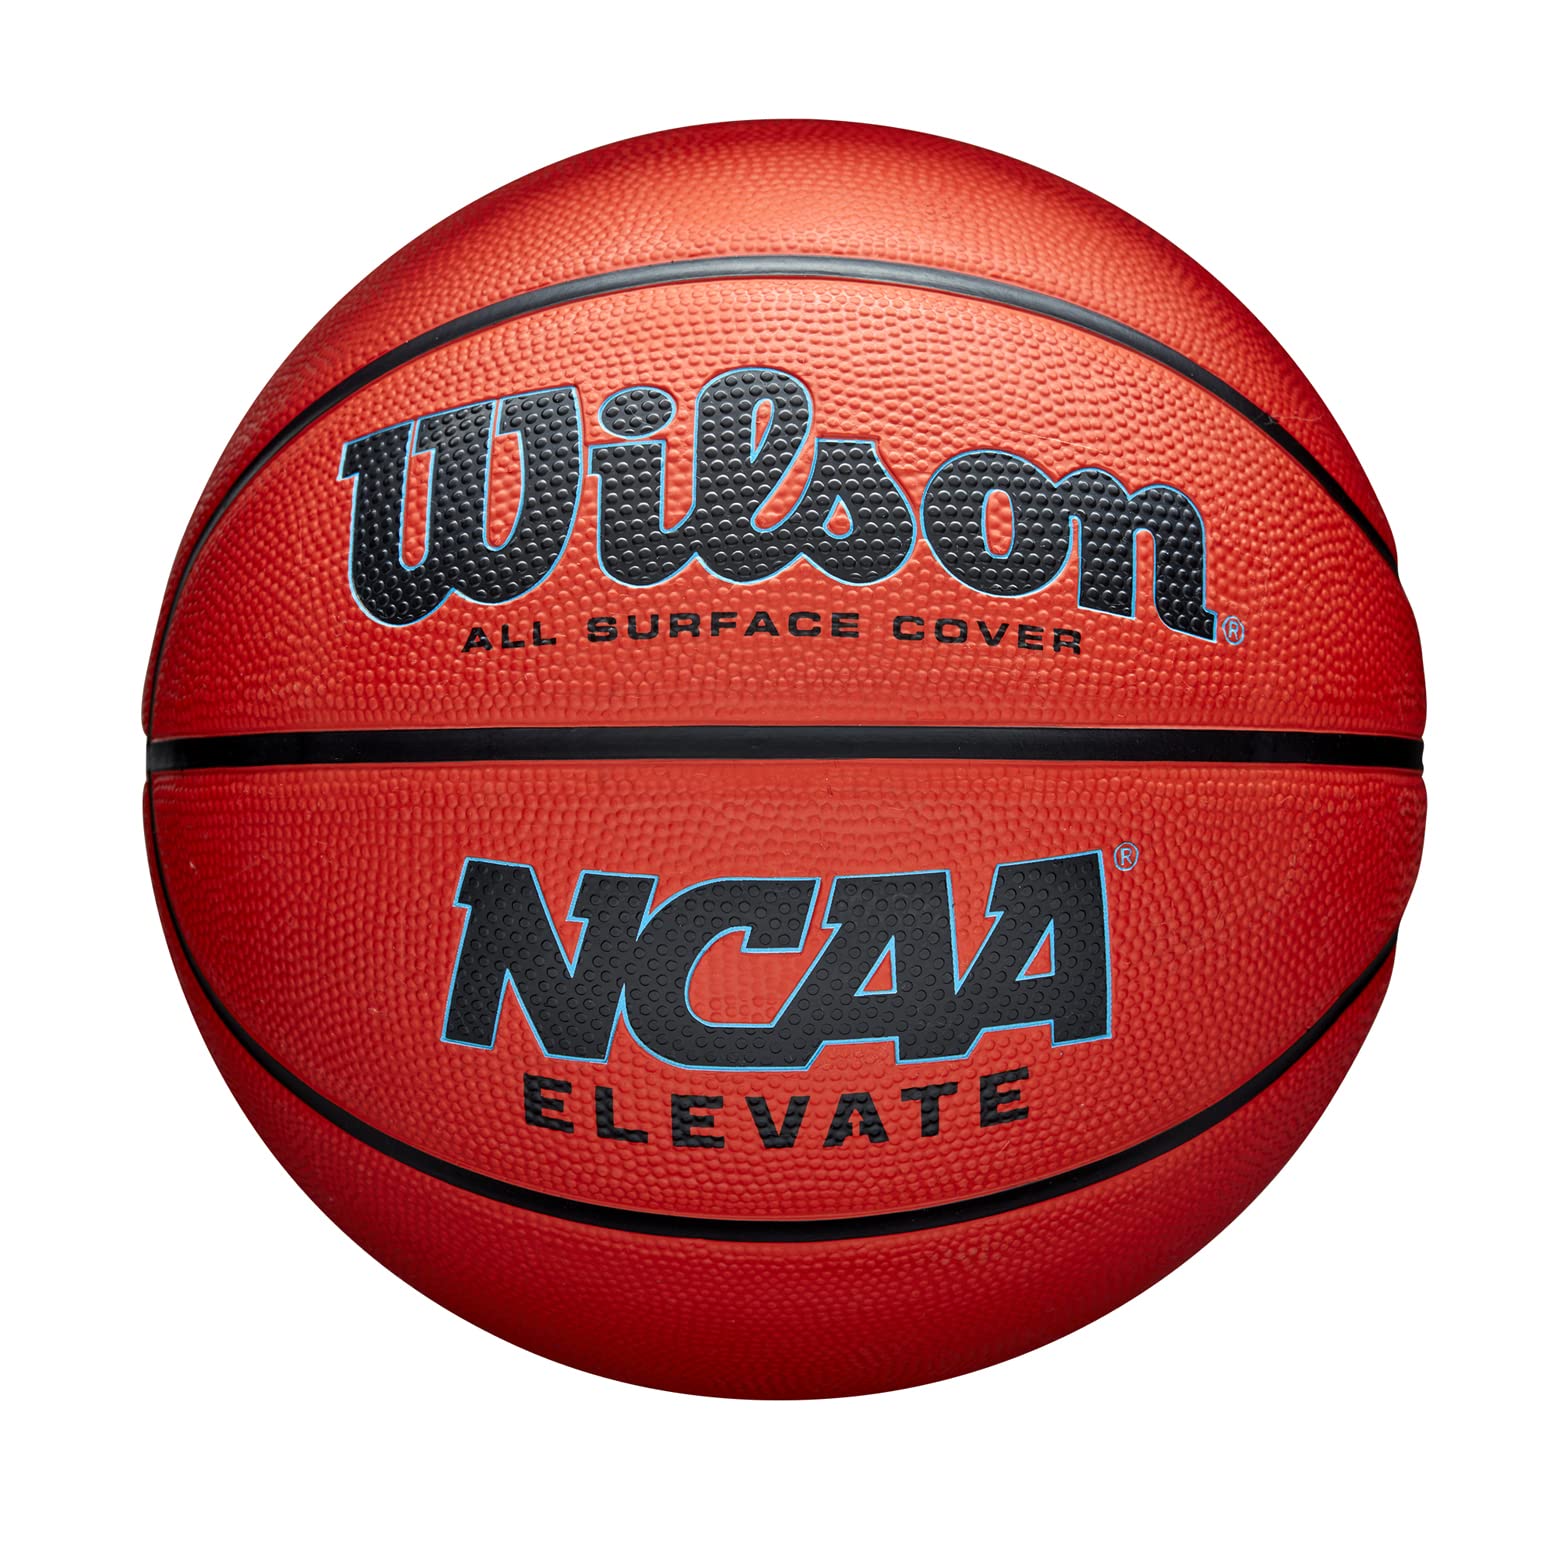 WILSON NCAA Elevate Basketball, Size 5 (27.5in), Orange